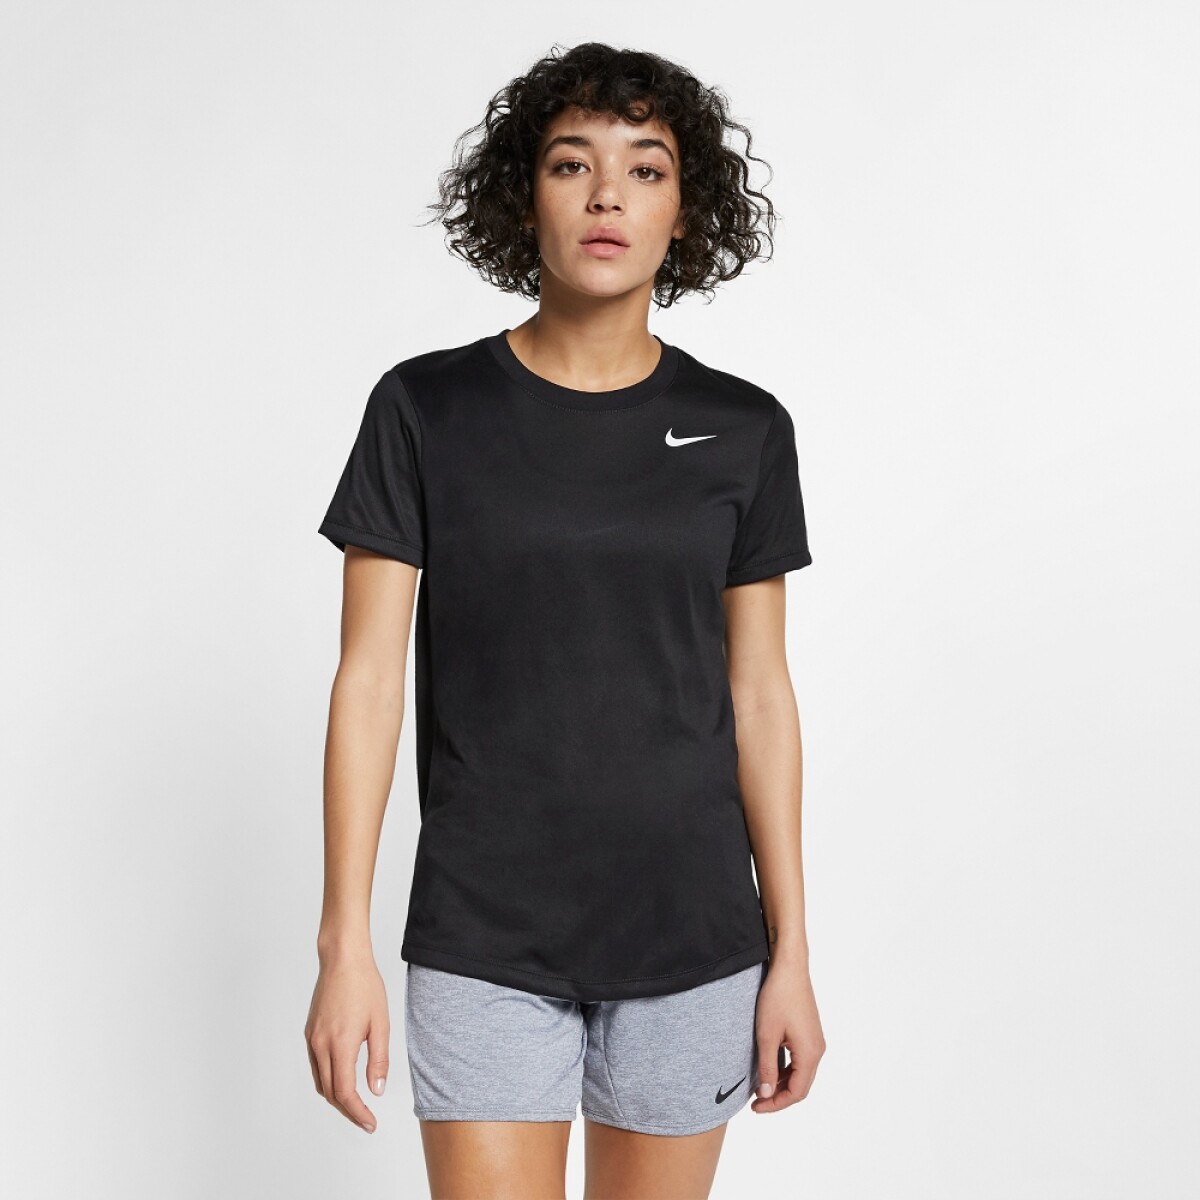 Remera Nike Training Dama Df Leg Tee Crew Black/(White) - Color Único 